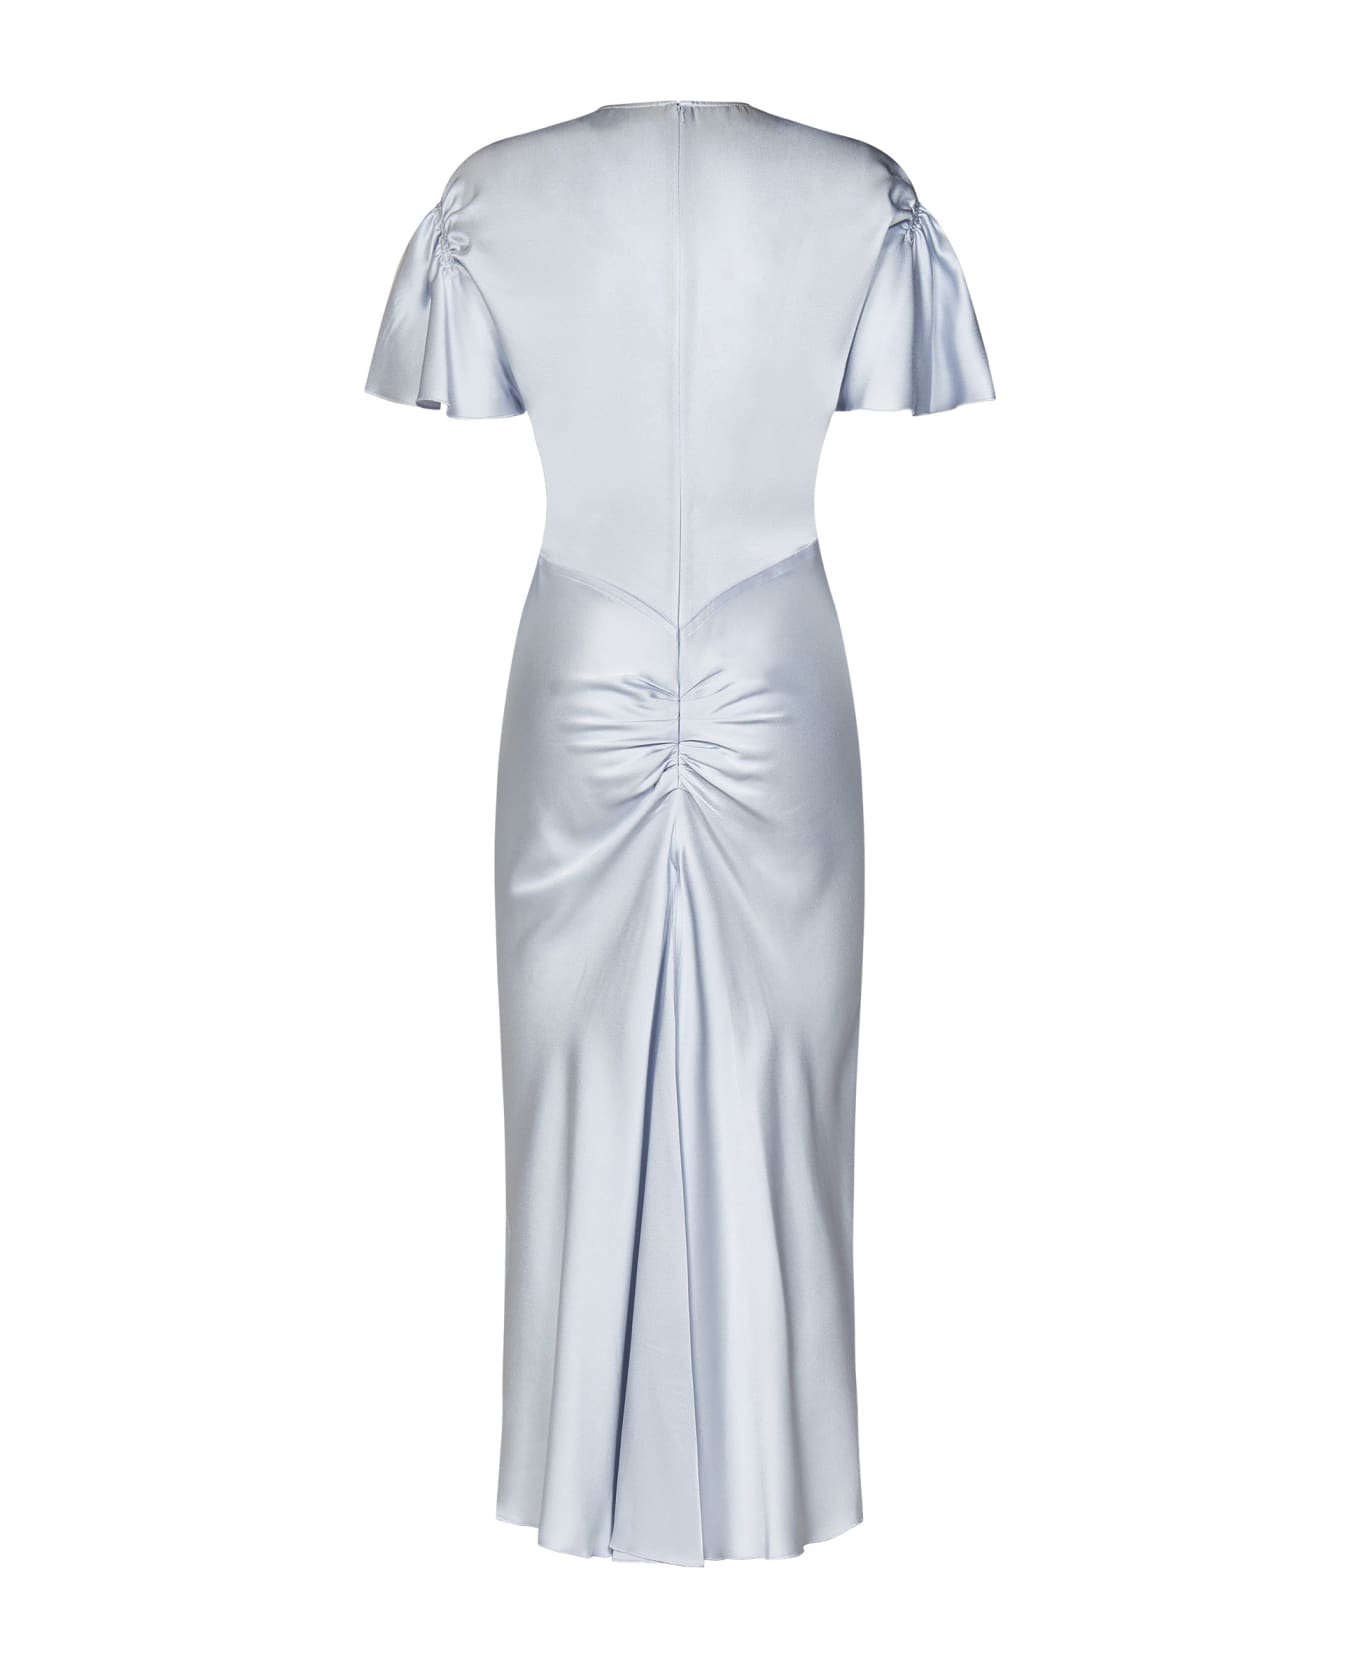 Victoria Beckham Gathered Sleeve Midi Dress Midi Dress - Light blue